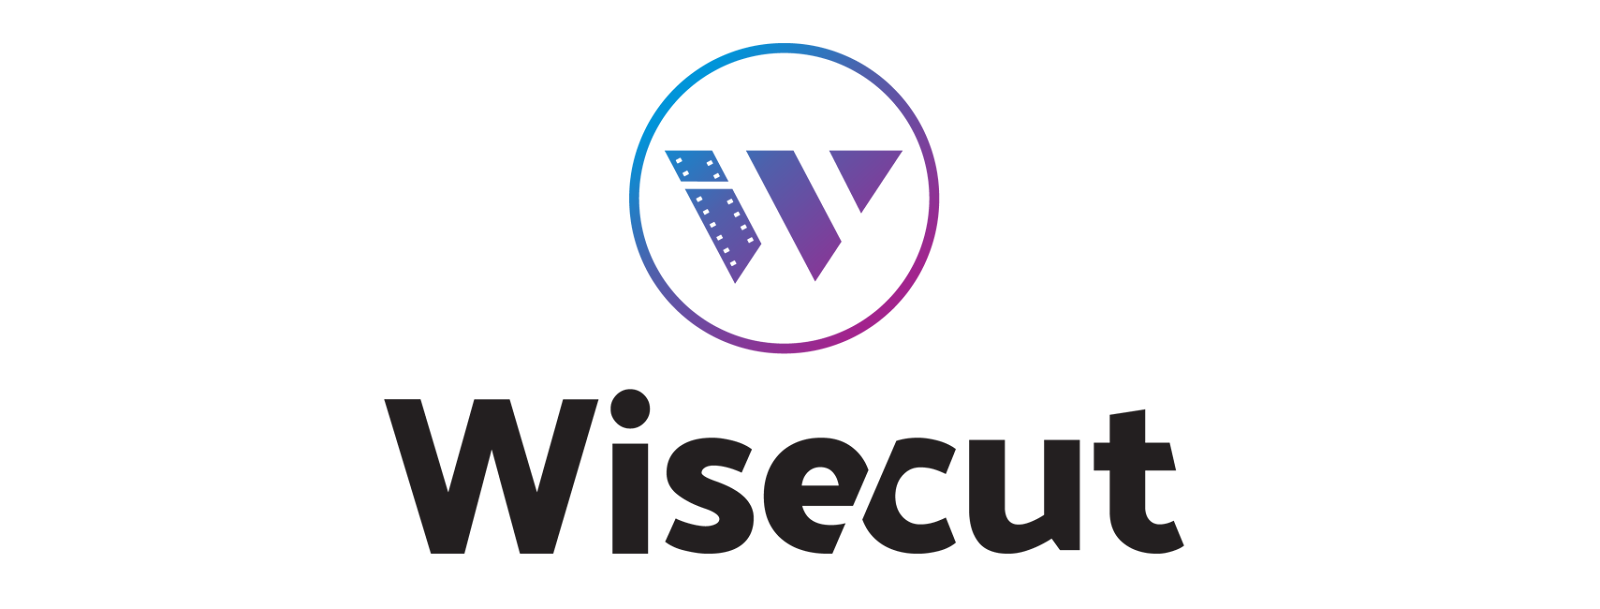 Wisecut logo.